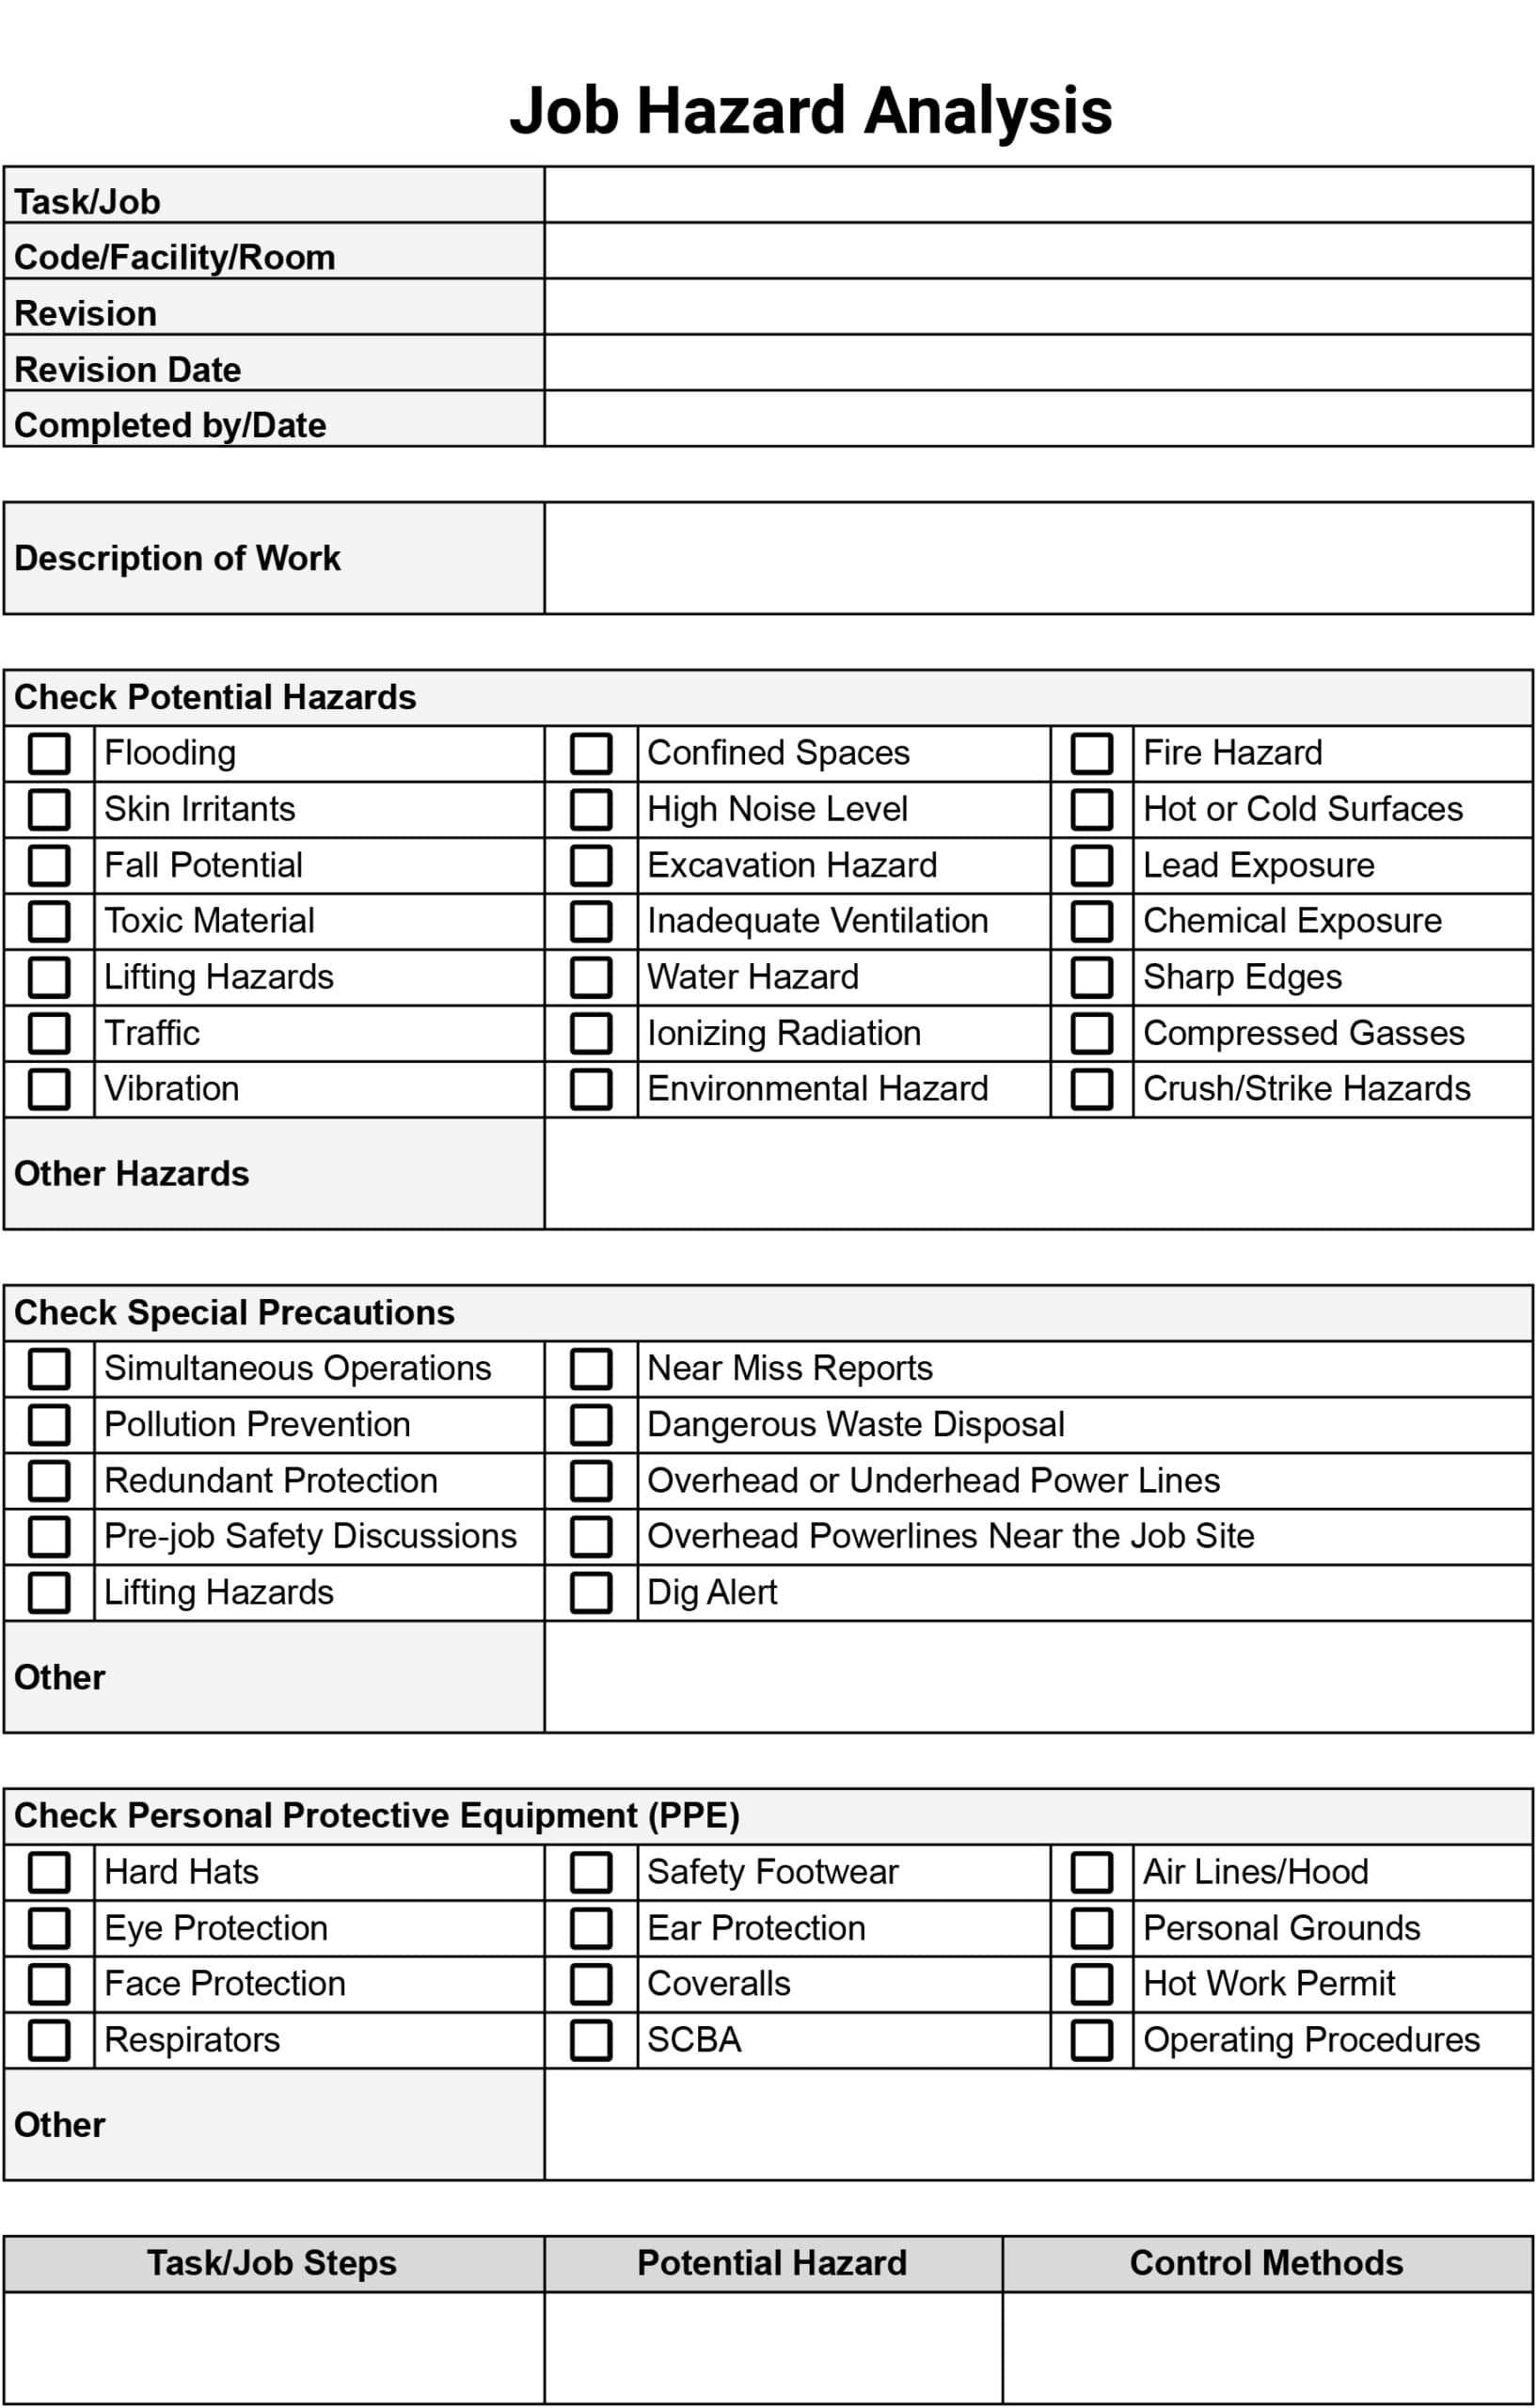 job-hazard-analysis-form-templates-download-print-for-free-sample-job-hazard-analysis-form